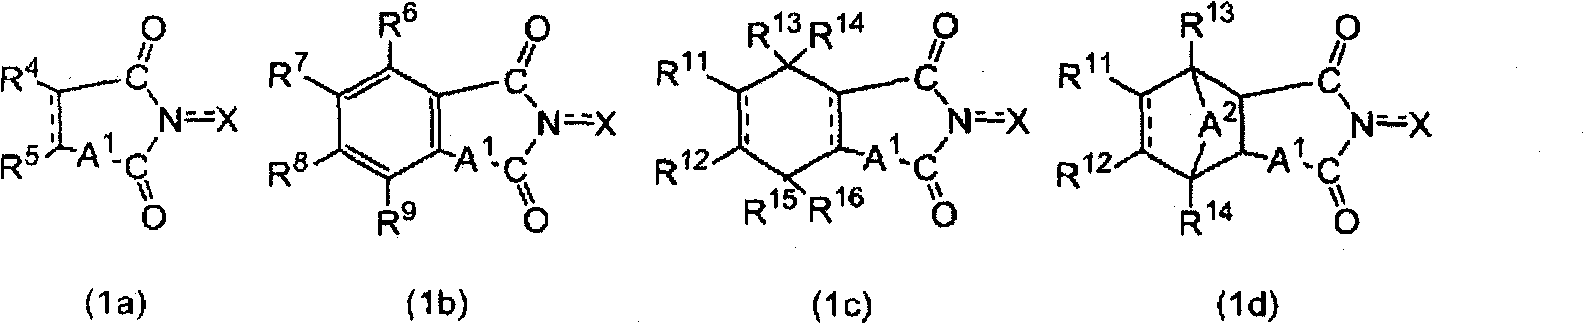 Aromatic polycarboxylic acid manufacturing method